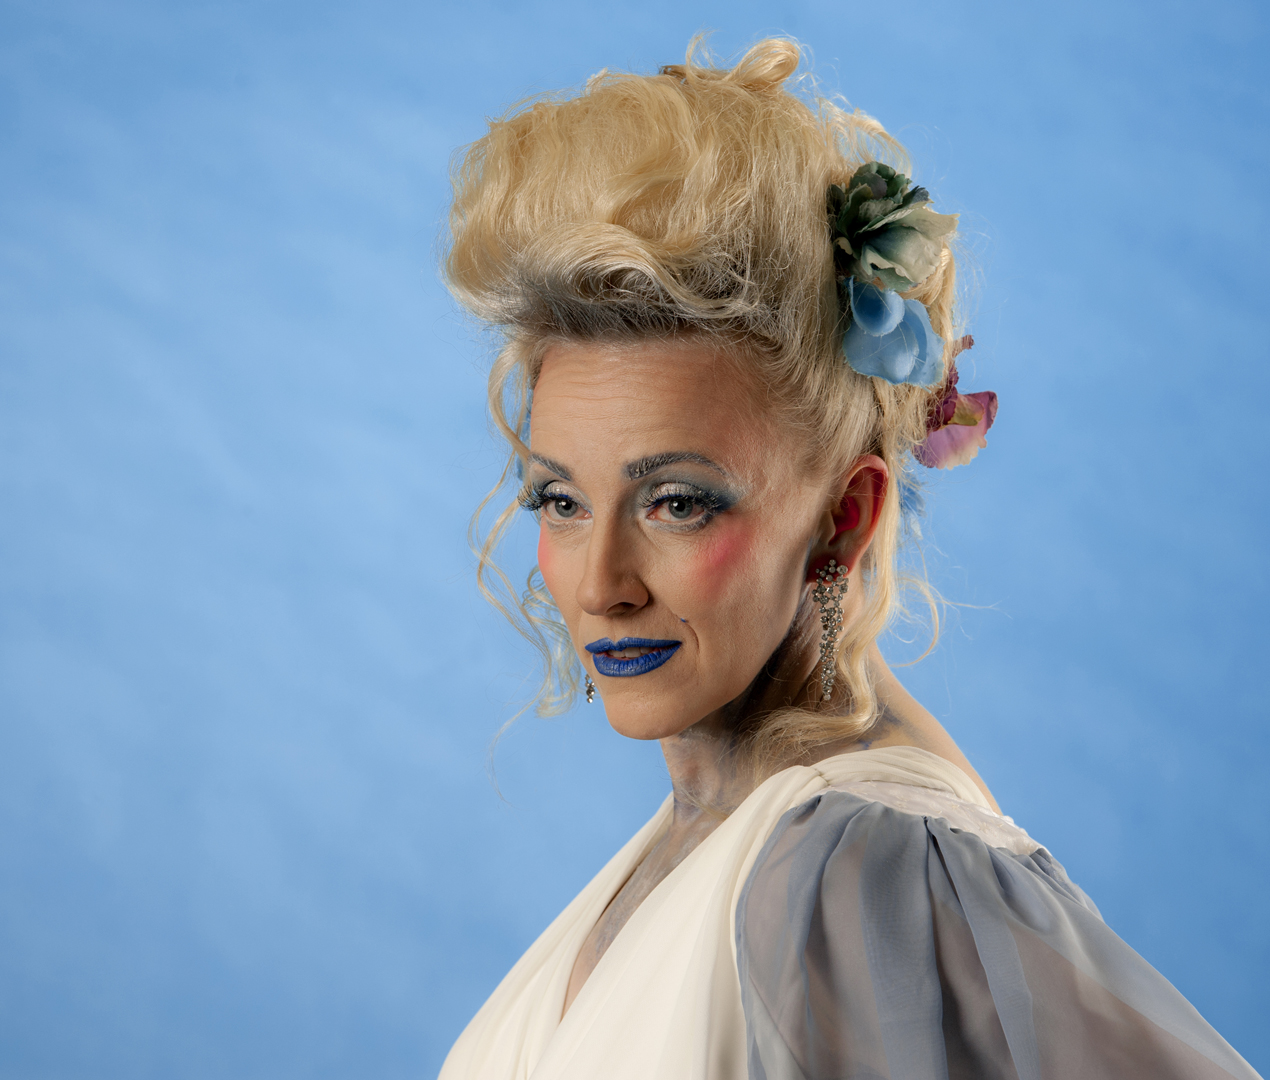 Blue lips (Leena-Maija Lindqvist)